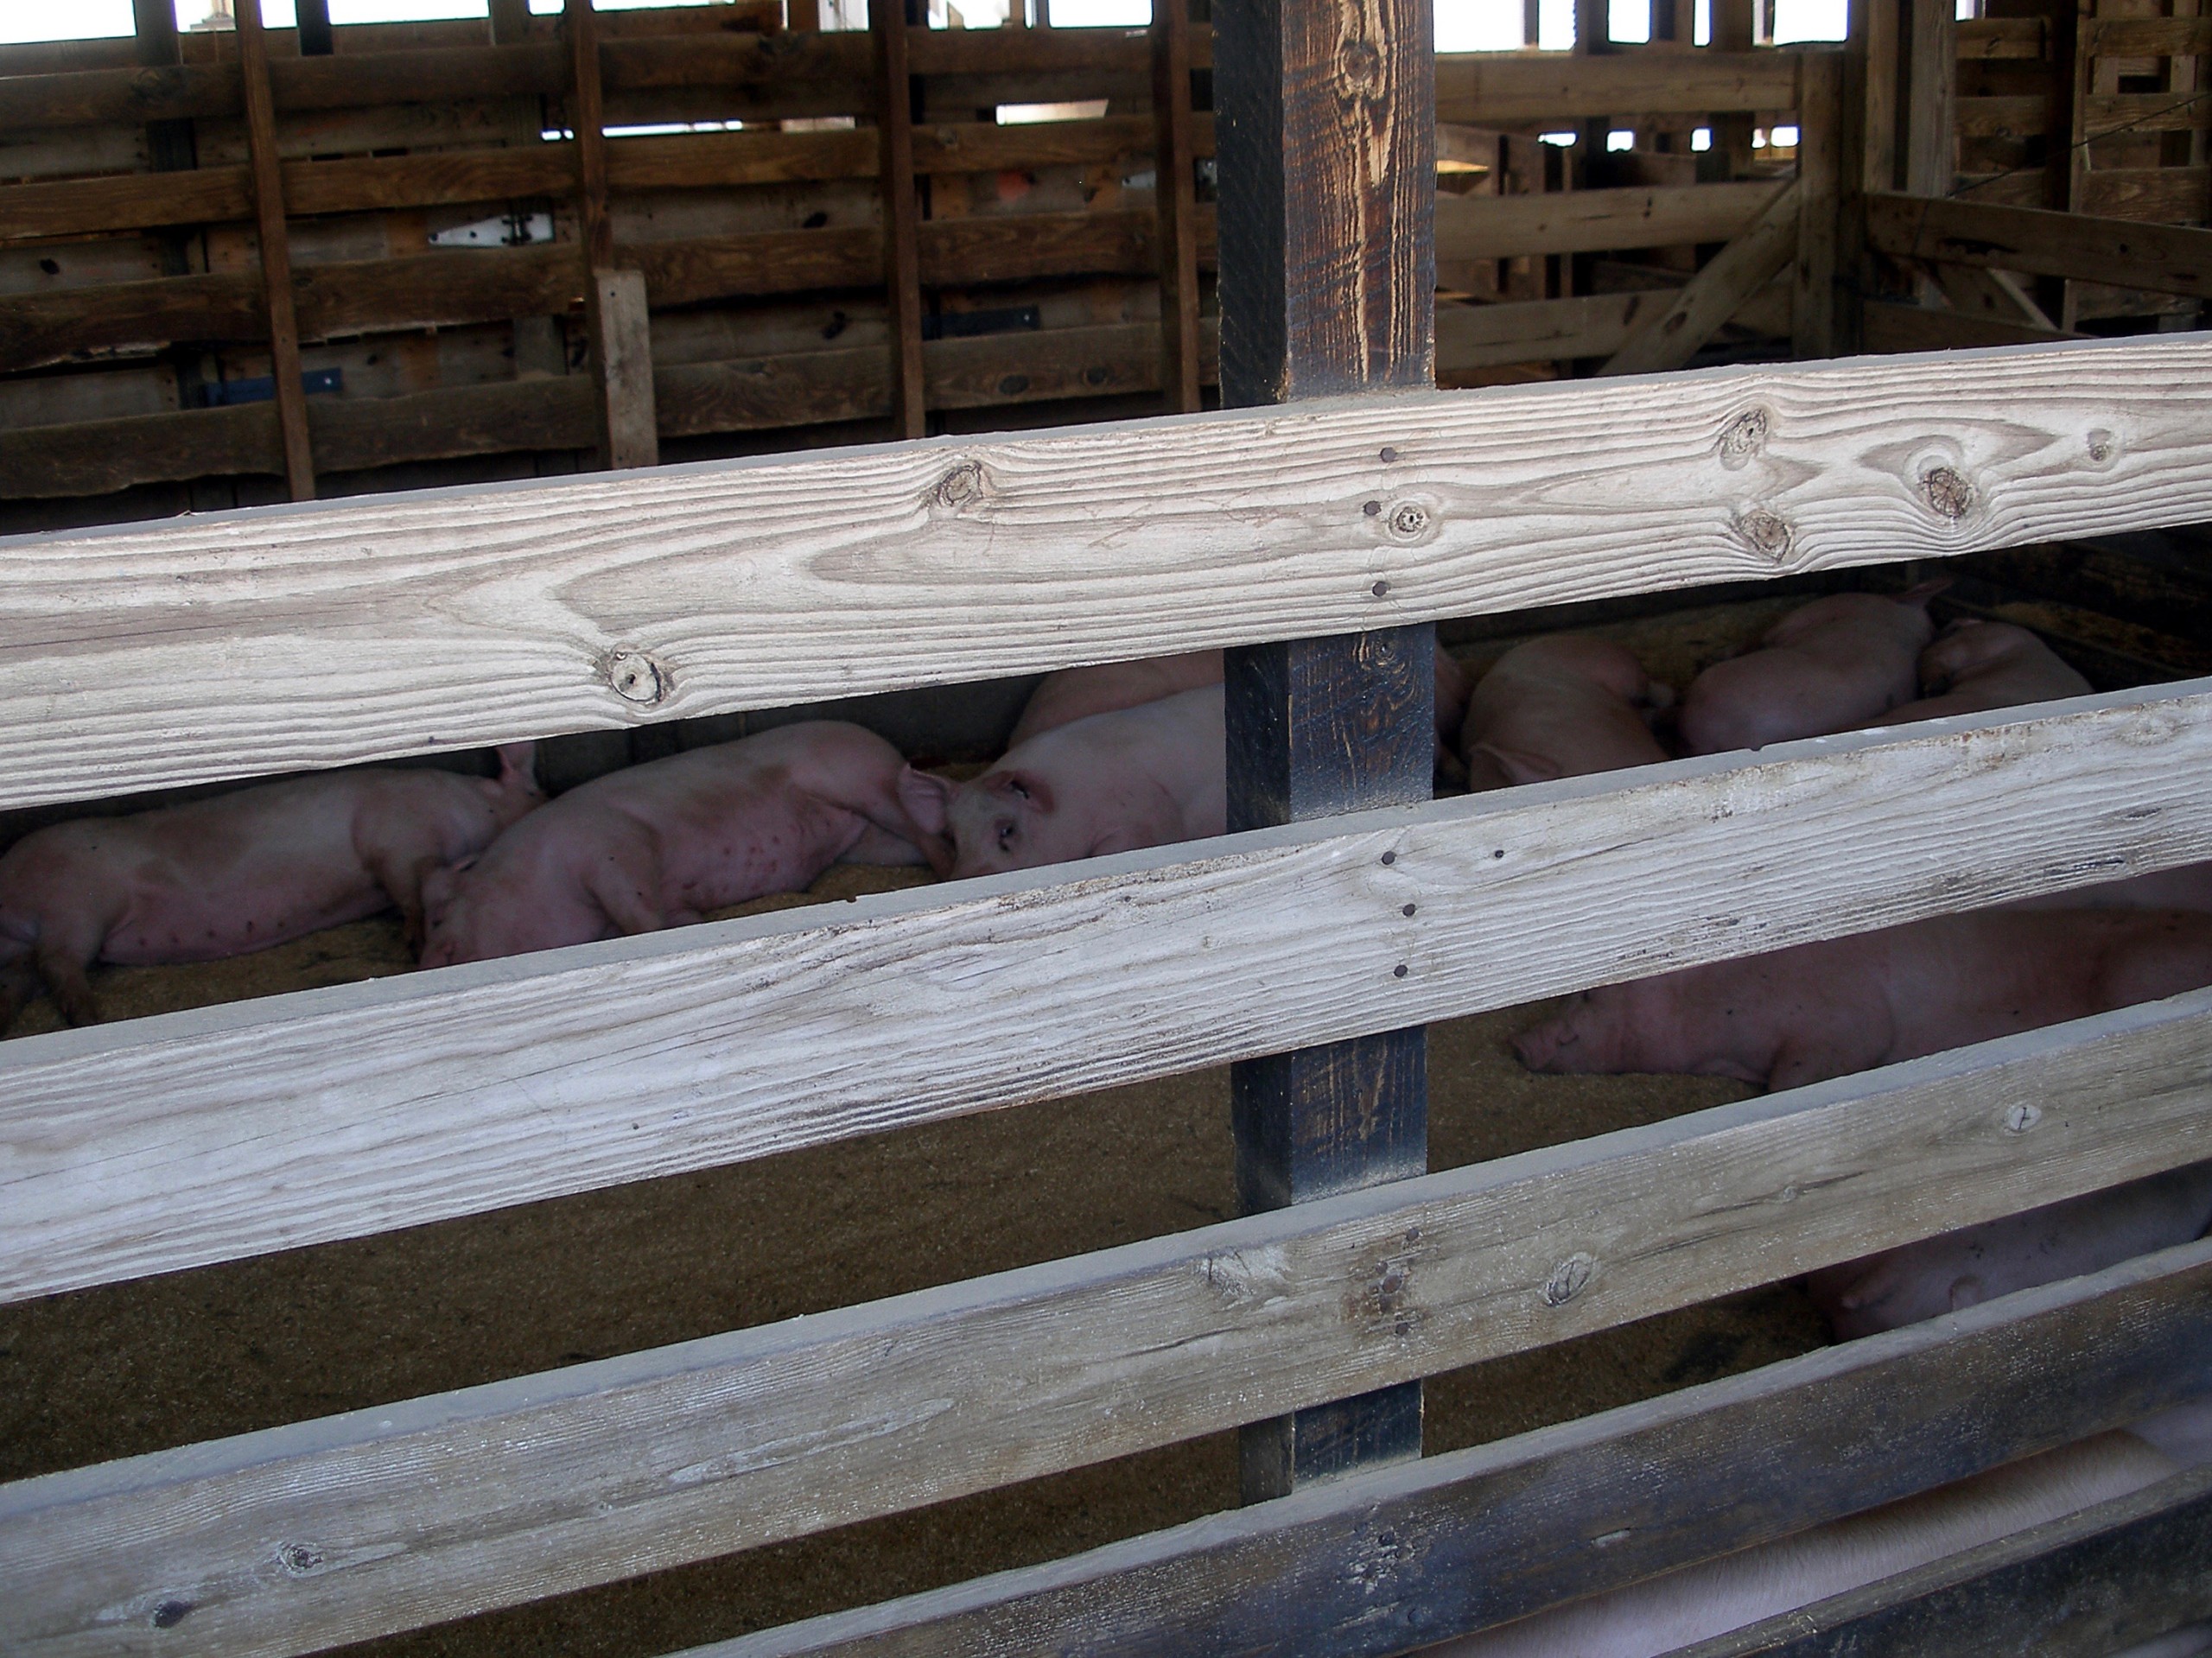 Pigs North Carolina